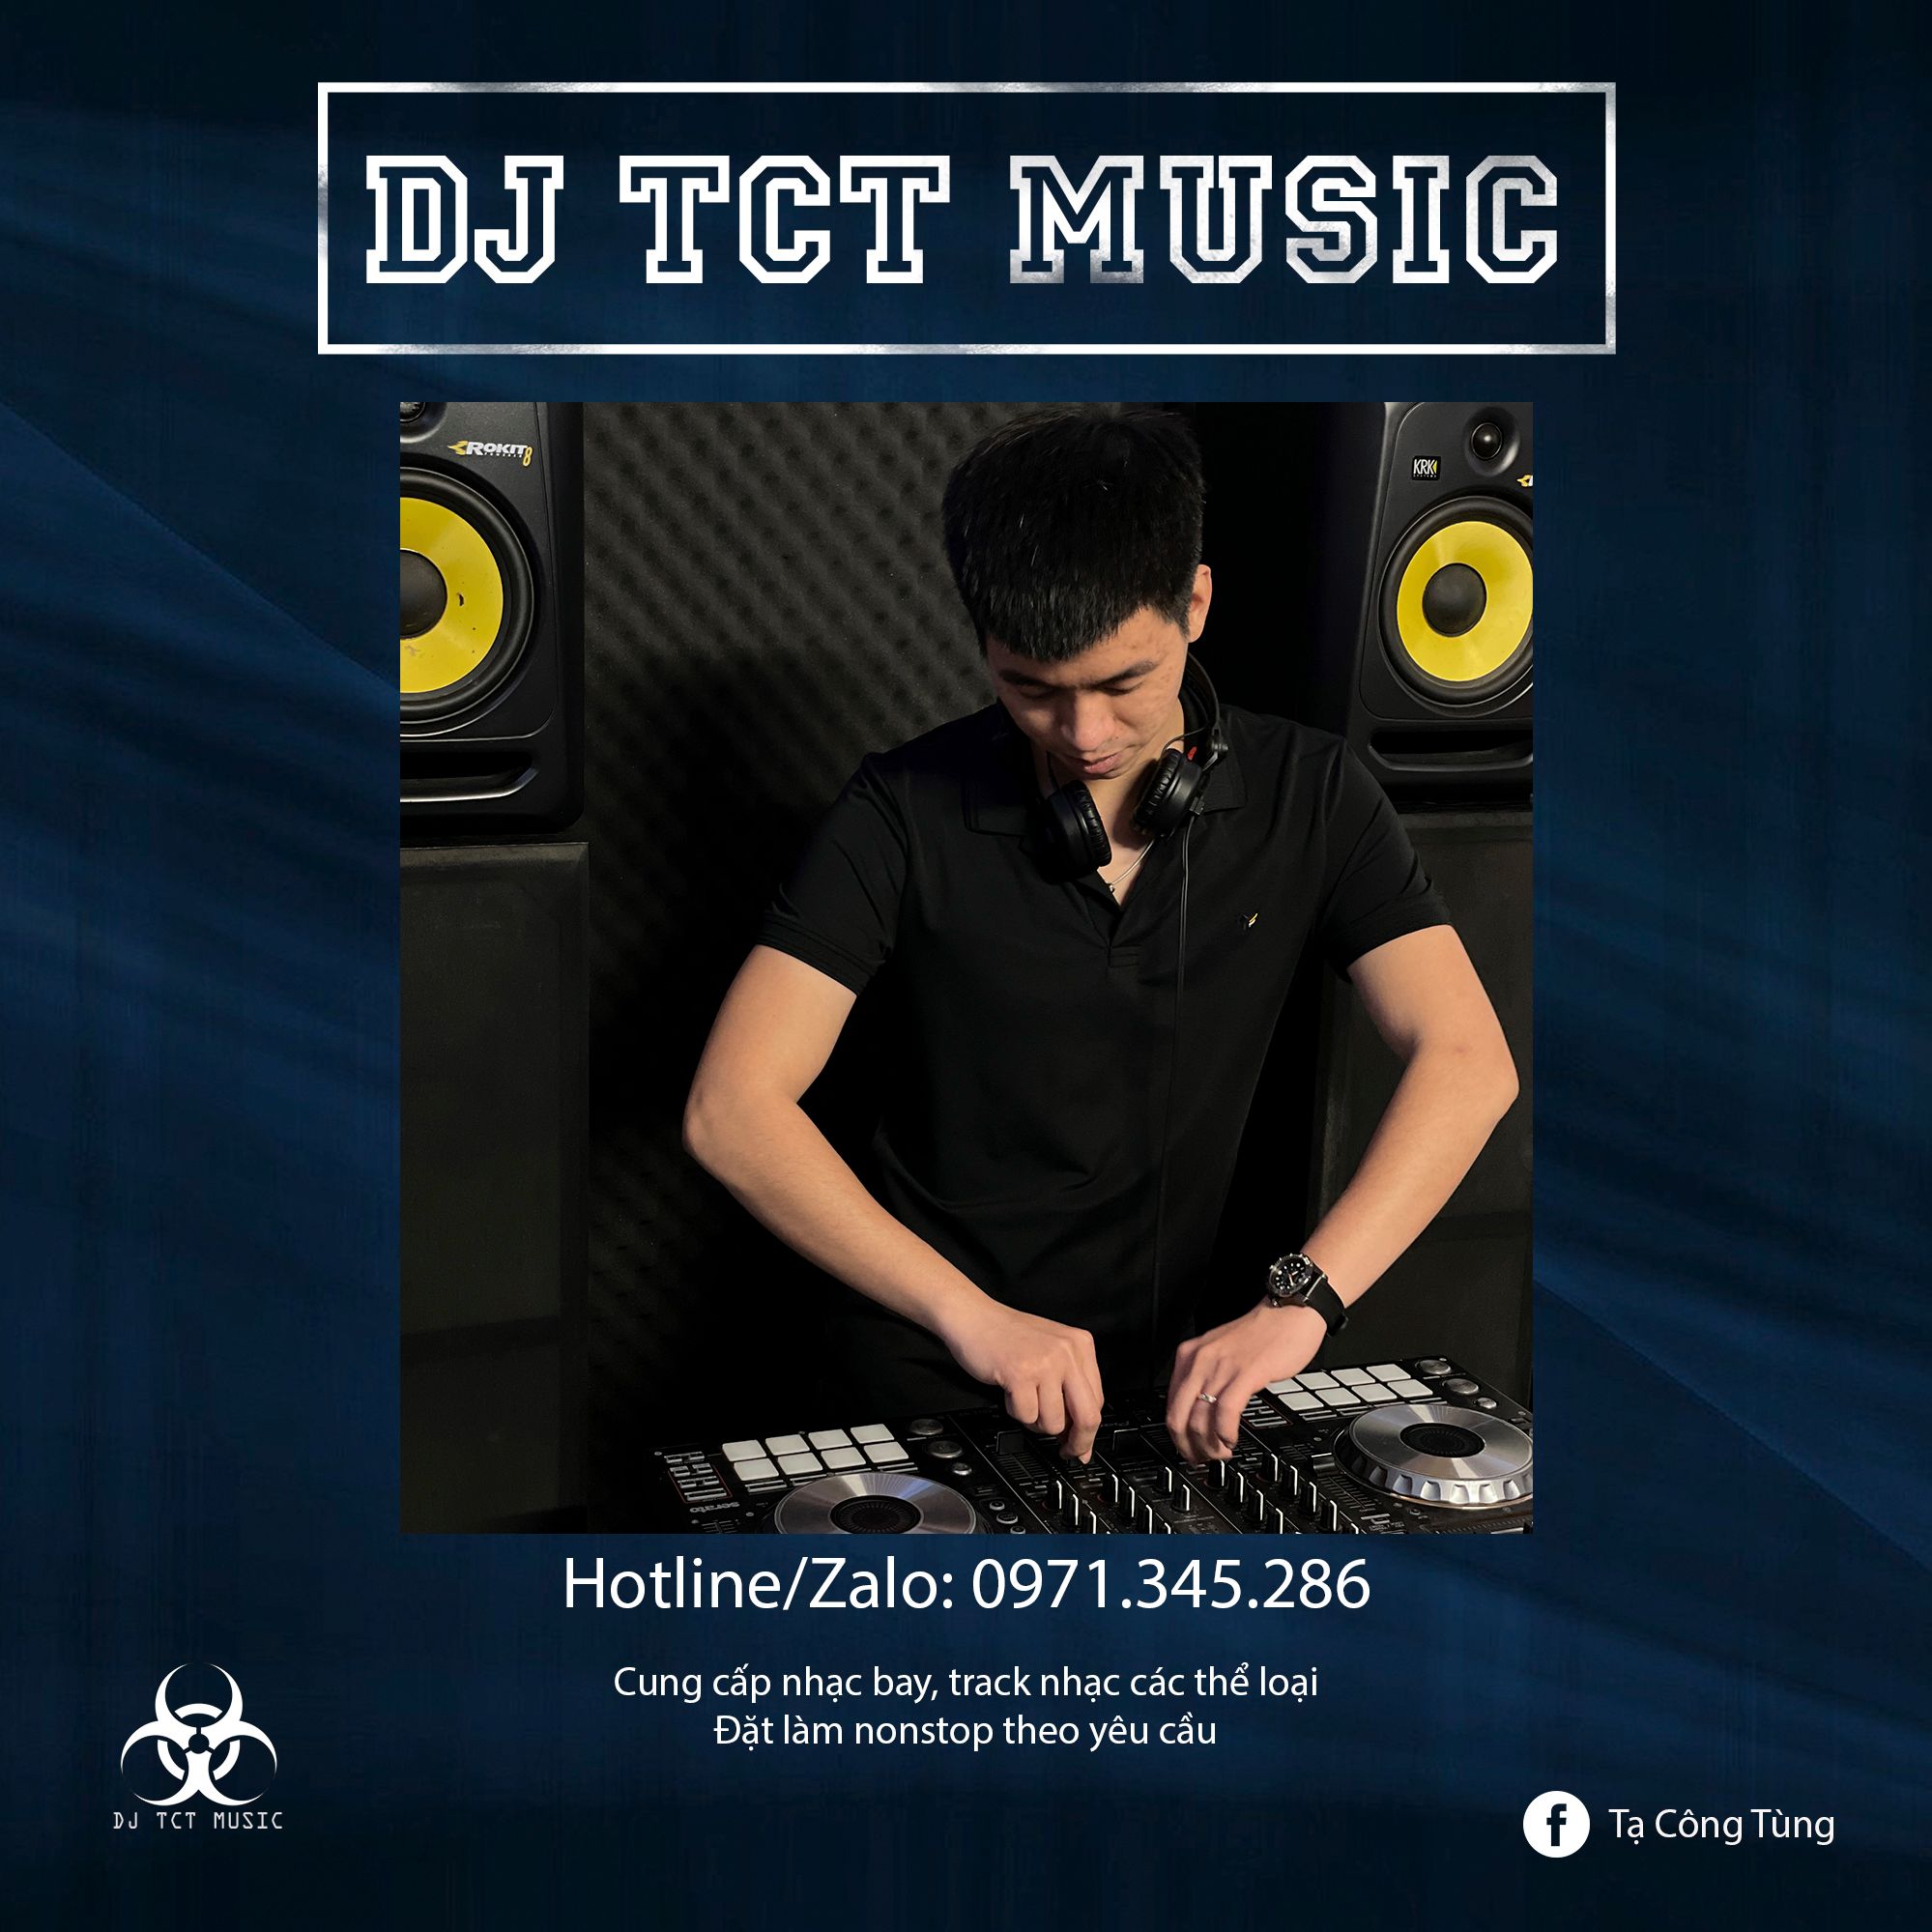 ダウンロード HÀNG TRÔI KE 2022 _ DJ TCT MUSIC 0971345286 _ NONSTOP BAY PHÒNG GIỌT NƯỚC CHẢY DỊU ÊM